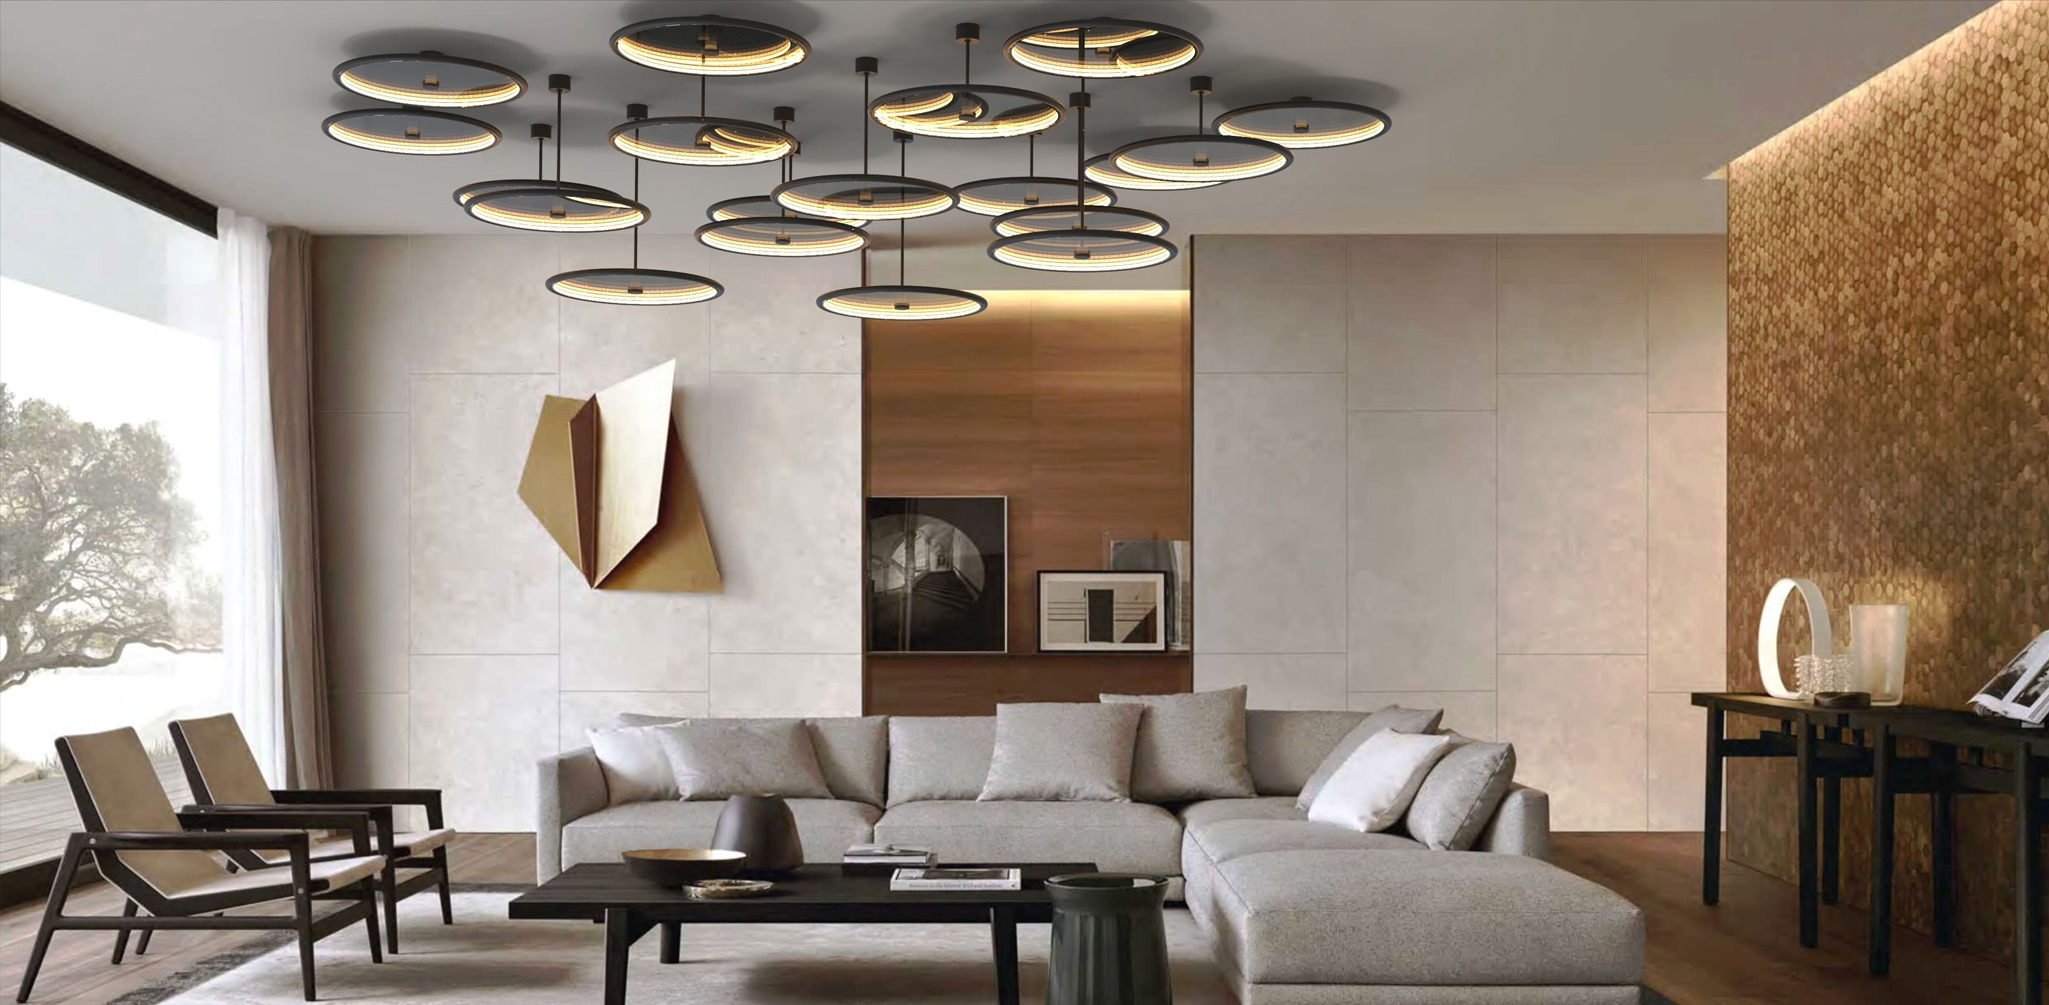 Minimal modern round lighting in minimal interior